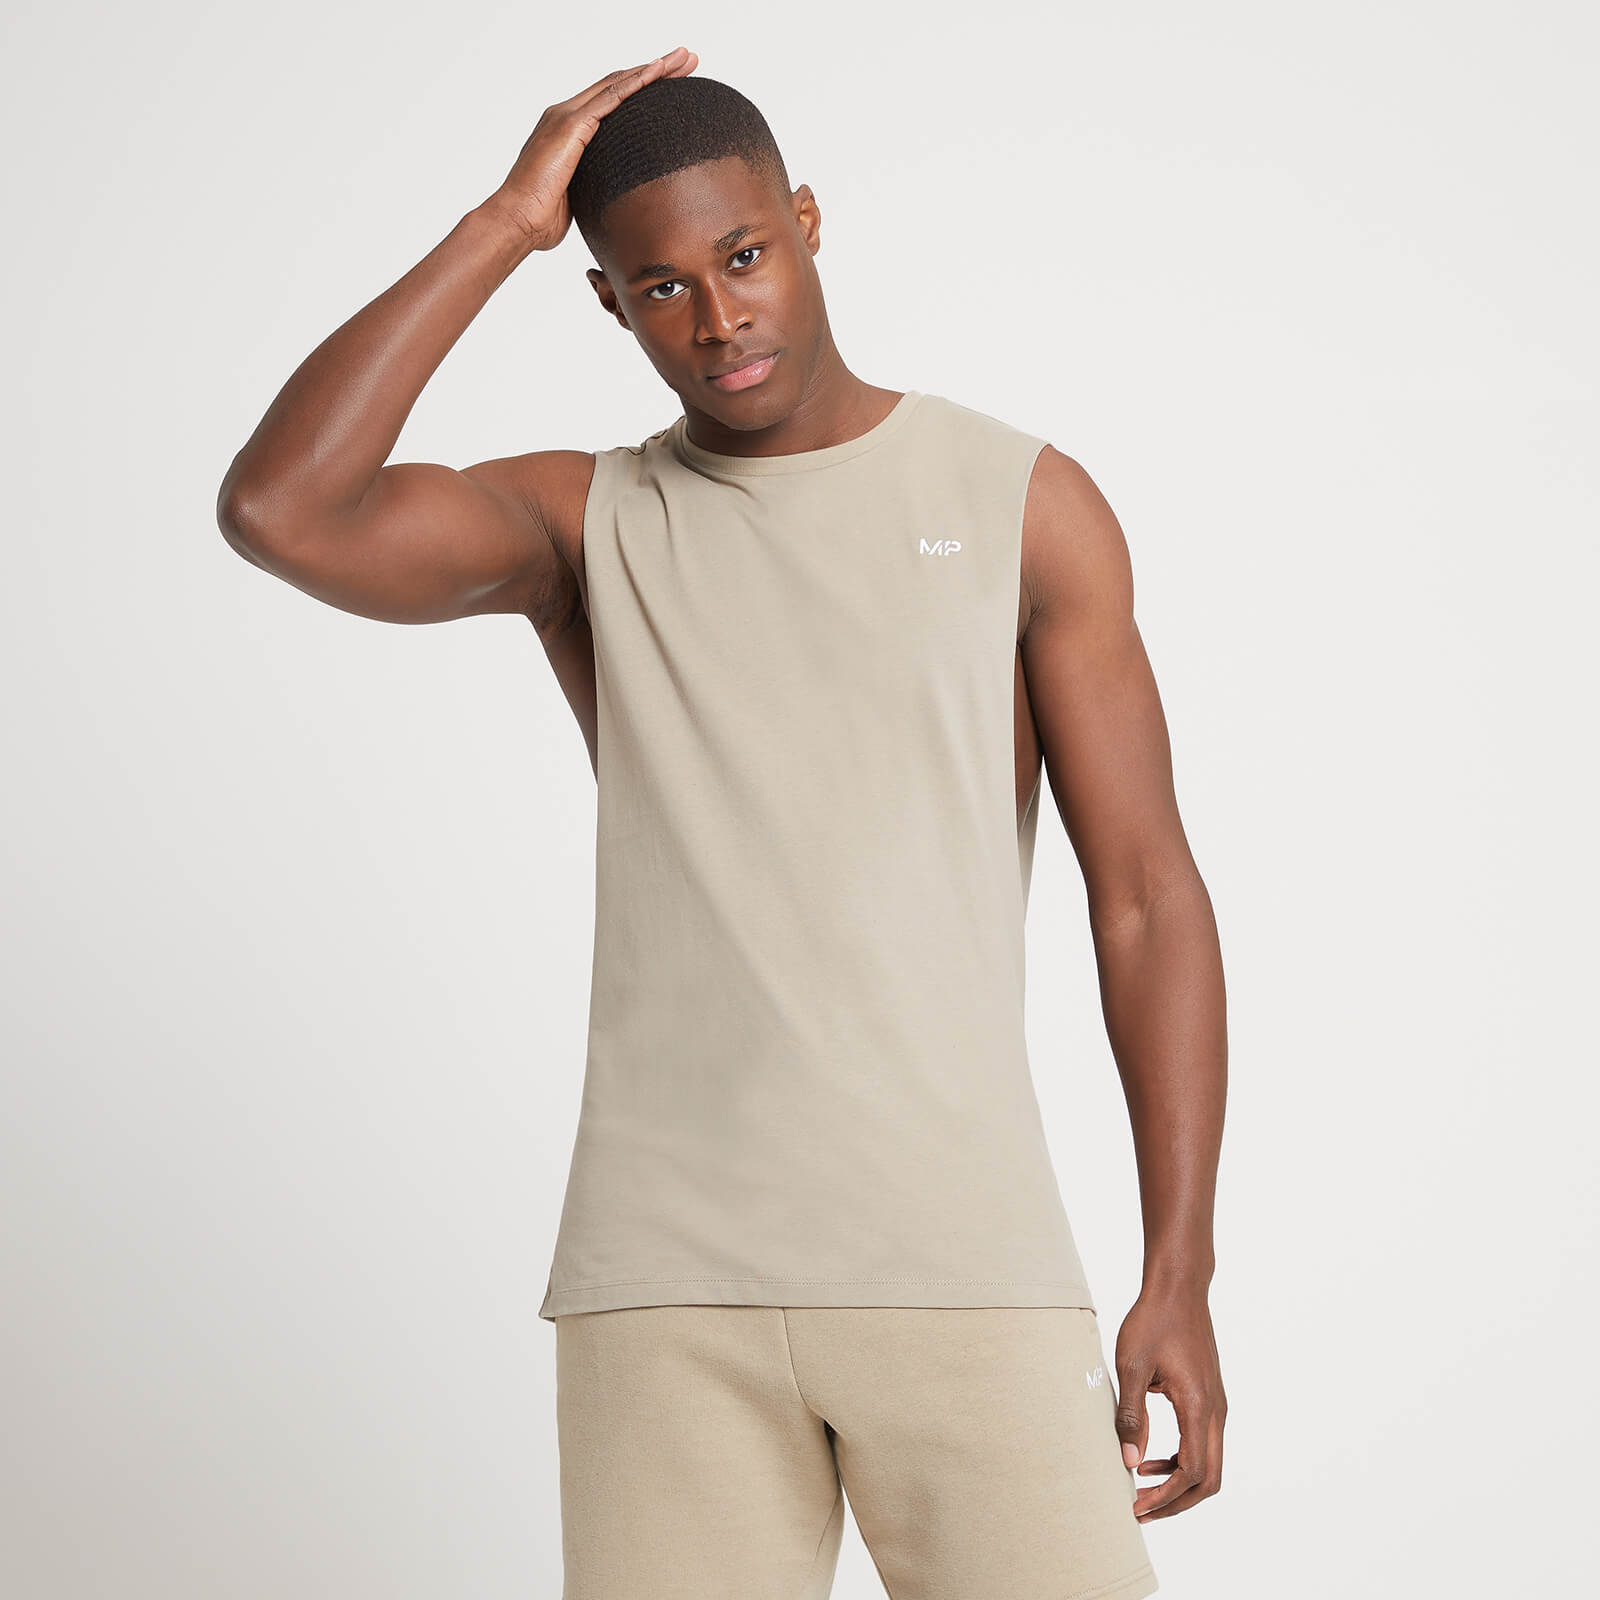 Camiseta sin mangas con sisas caídas para hombre de MP - Marrón grisáceo - L